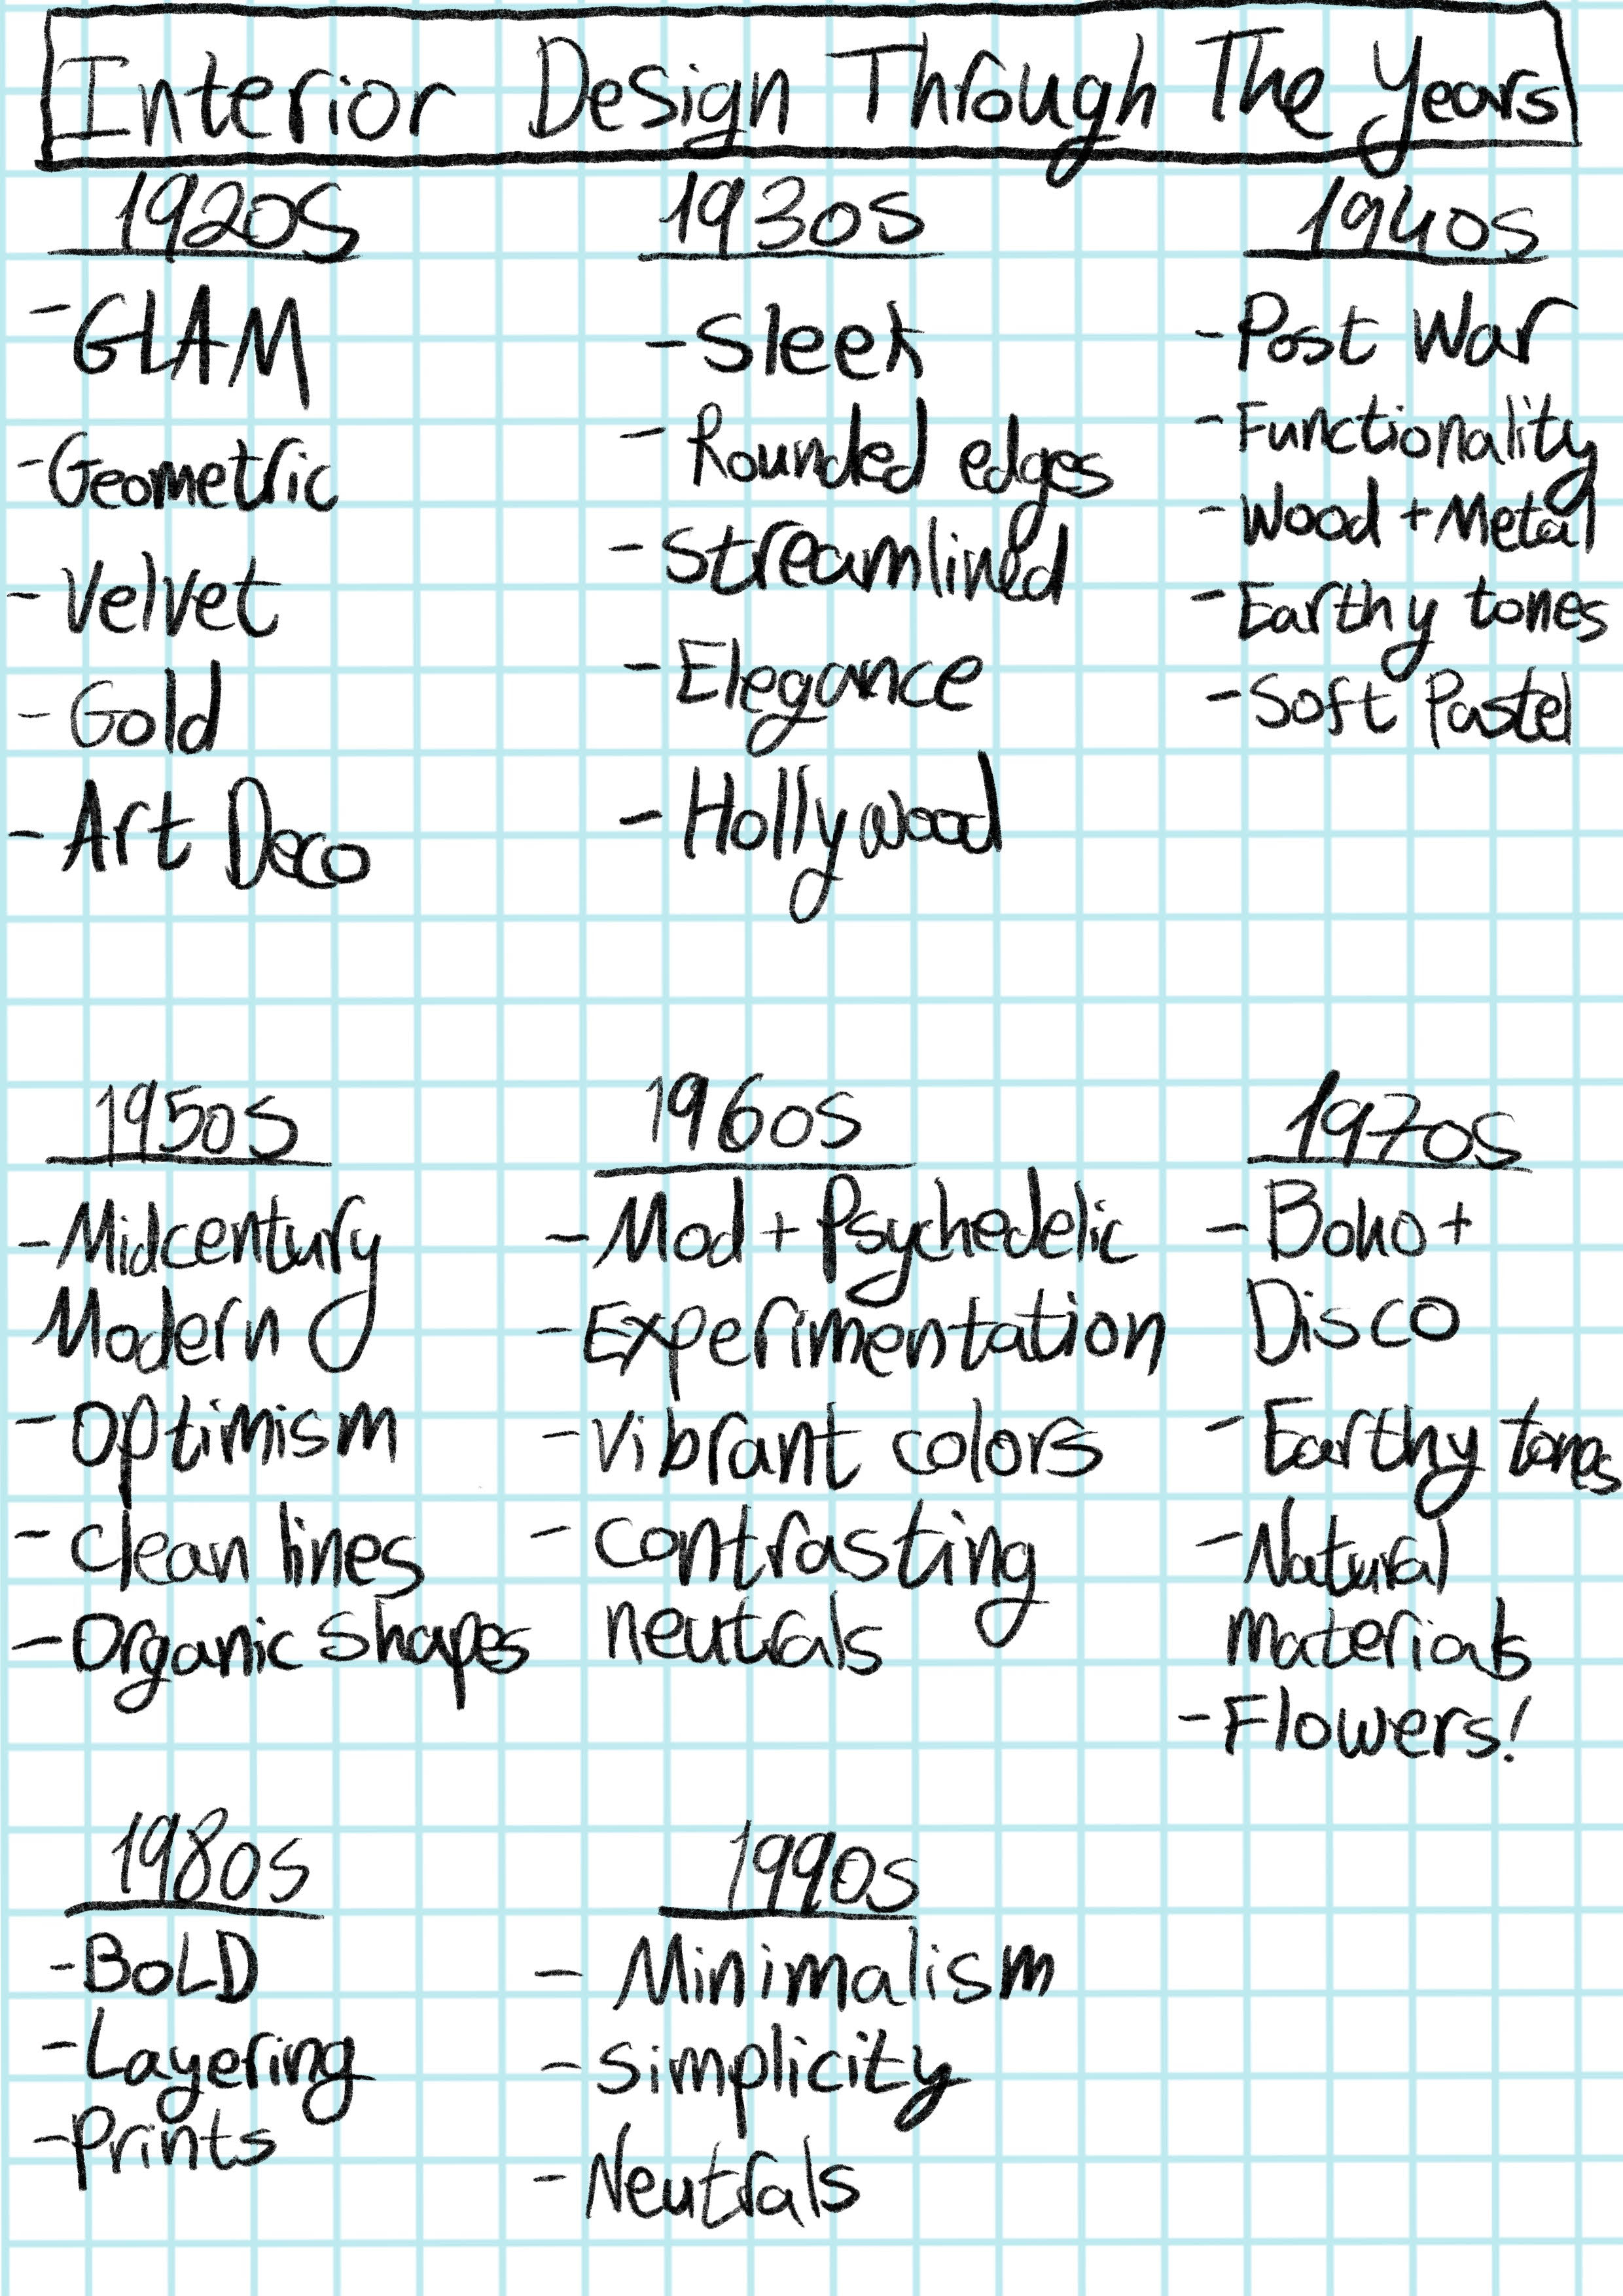 a class summary of design through the decades 